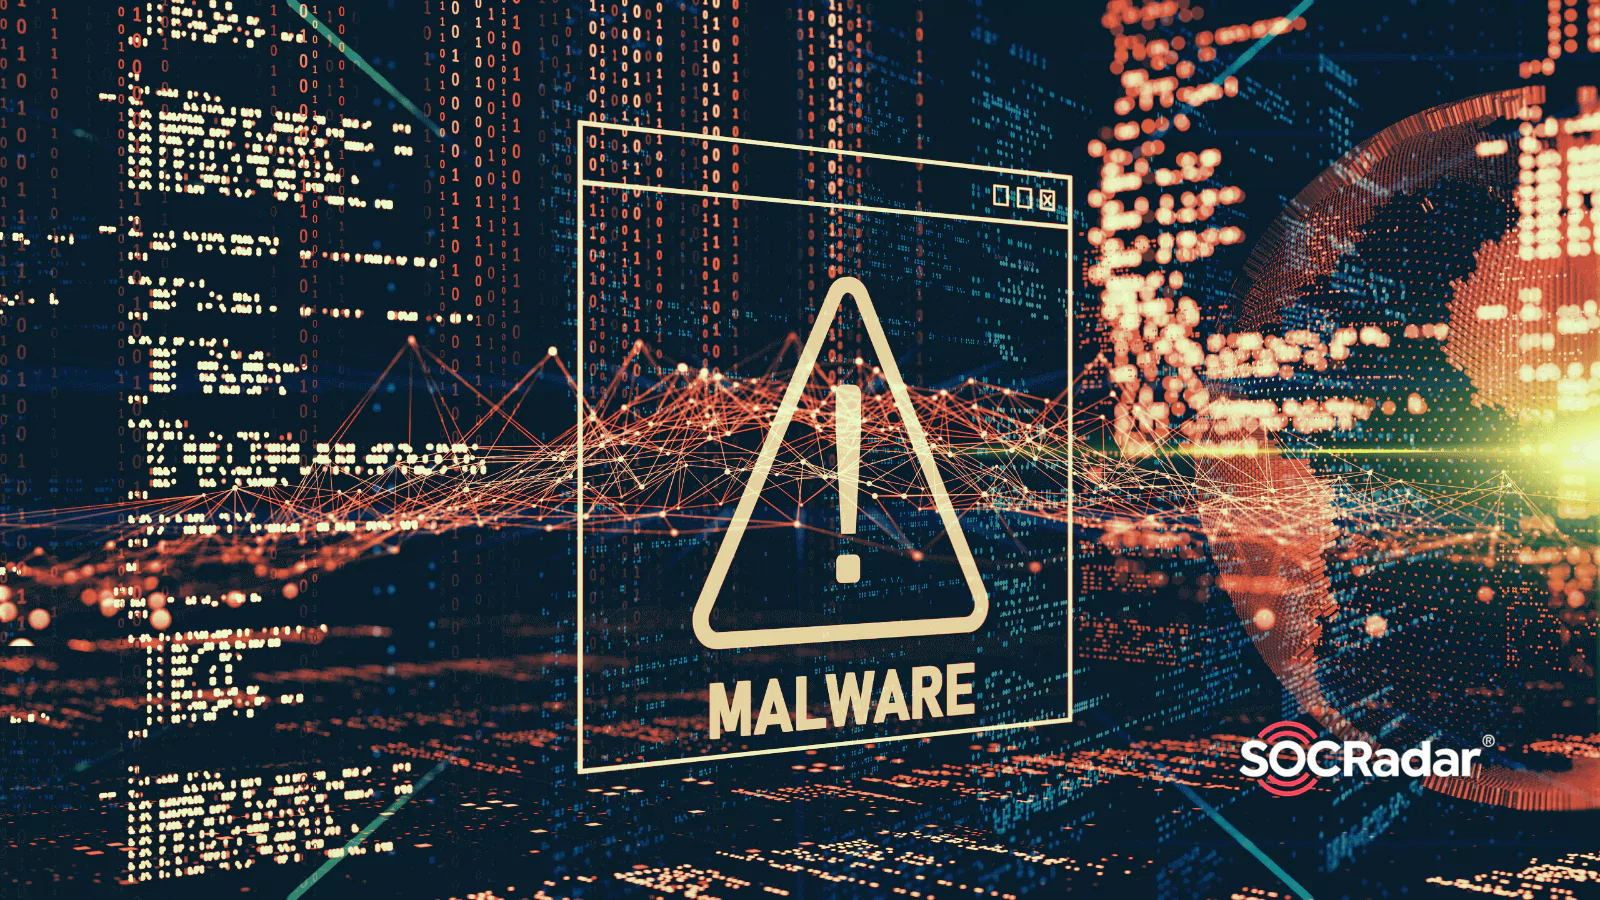 SOCRadar® Cyber Intelligence Inc. | LOBSHOT hVNC Malware: A New Threat Distributed Through Google Ads